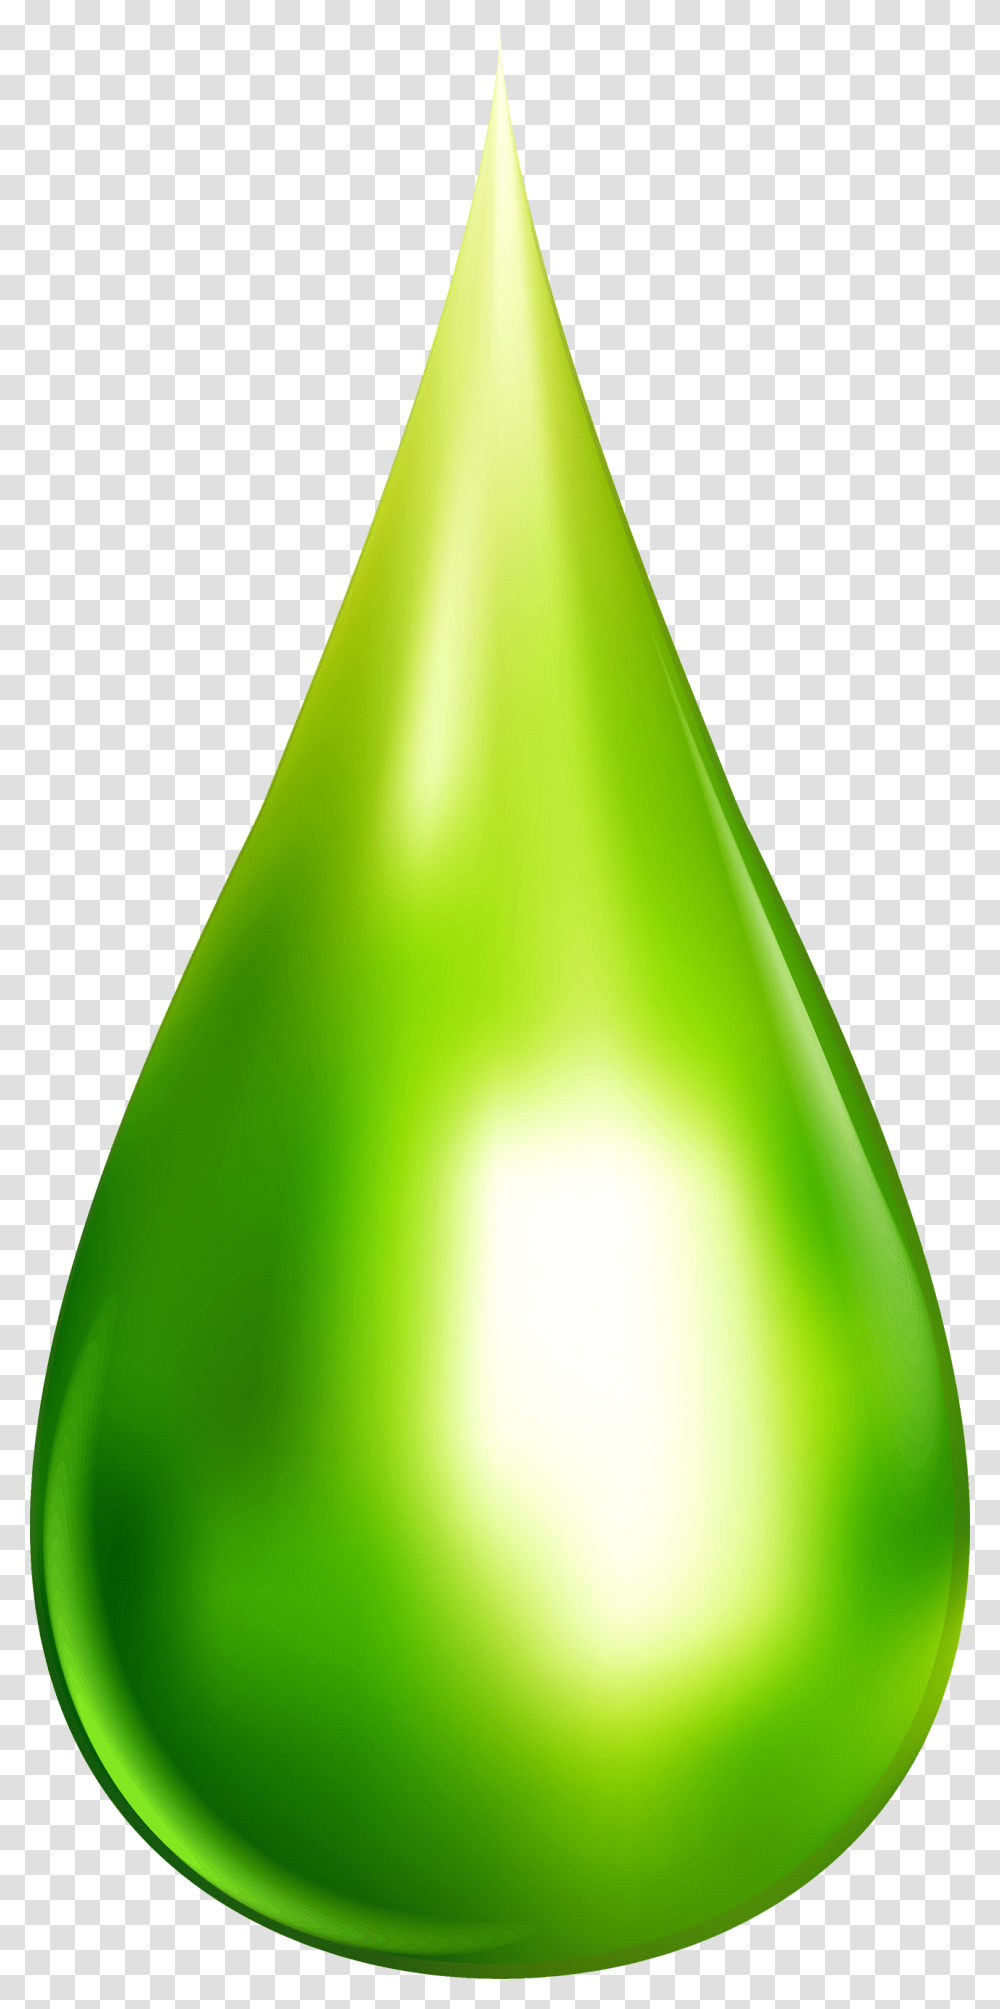 Drop Download Water Dew Green Water Drop, Apparel, Plant, Alcohol Transparent Png